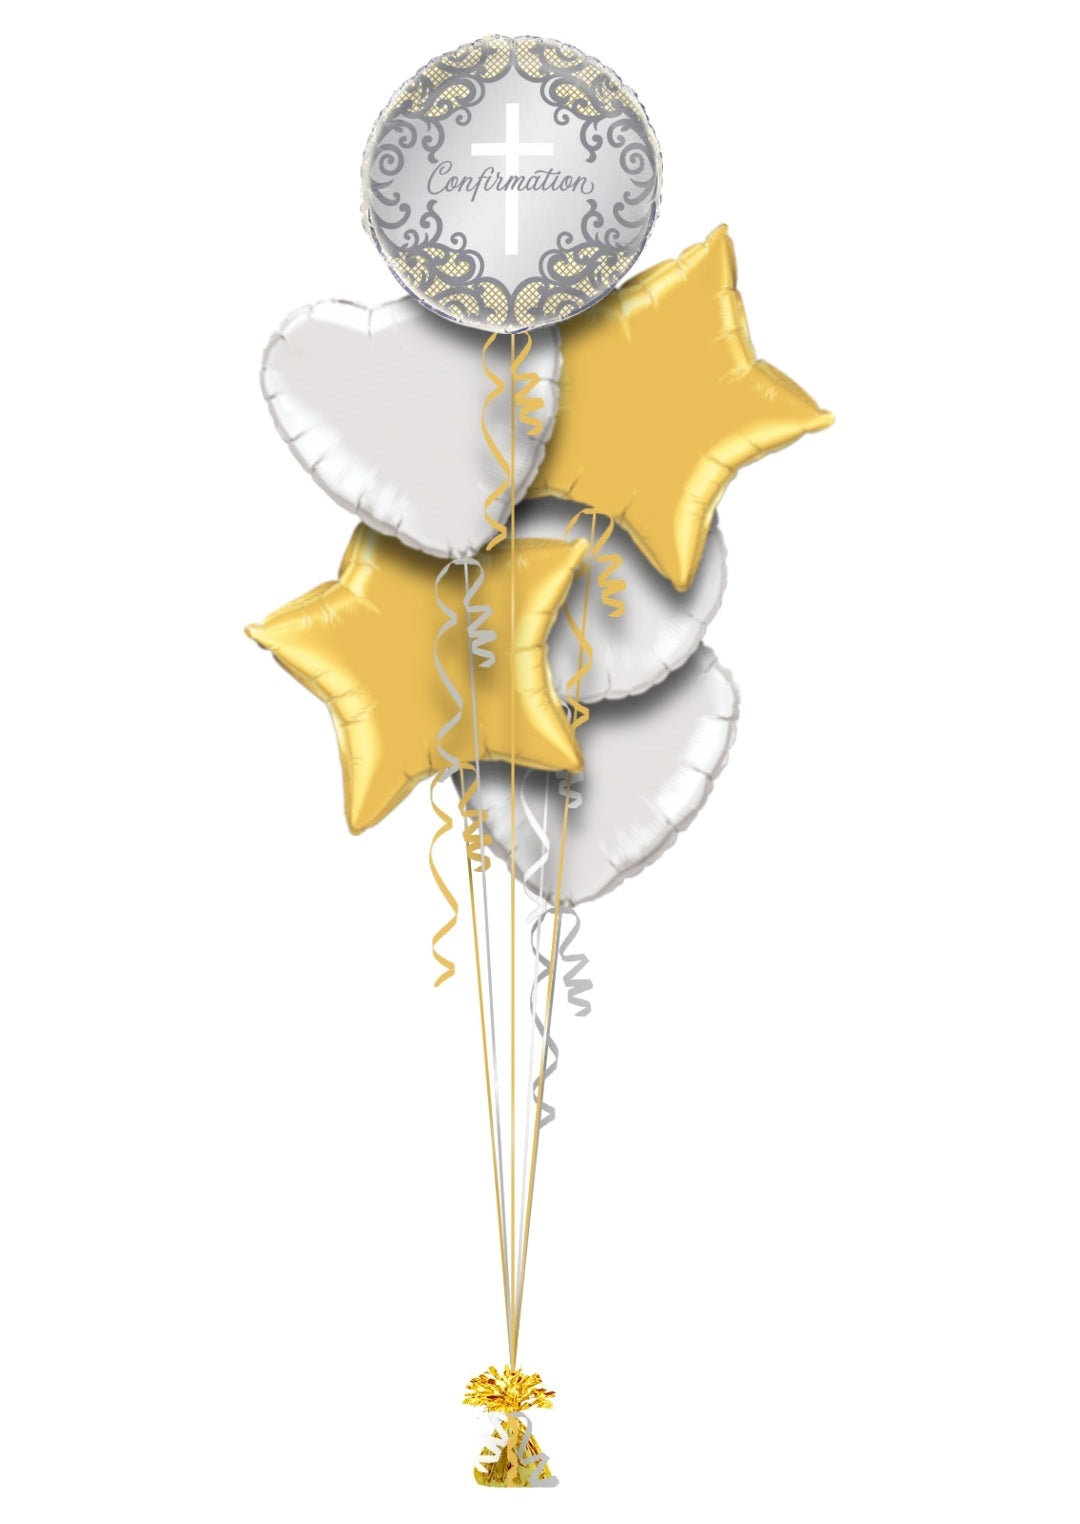 Confirmation Balloon Bouquet